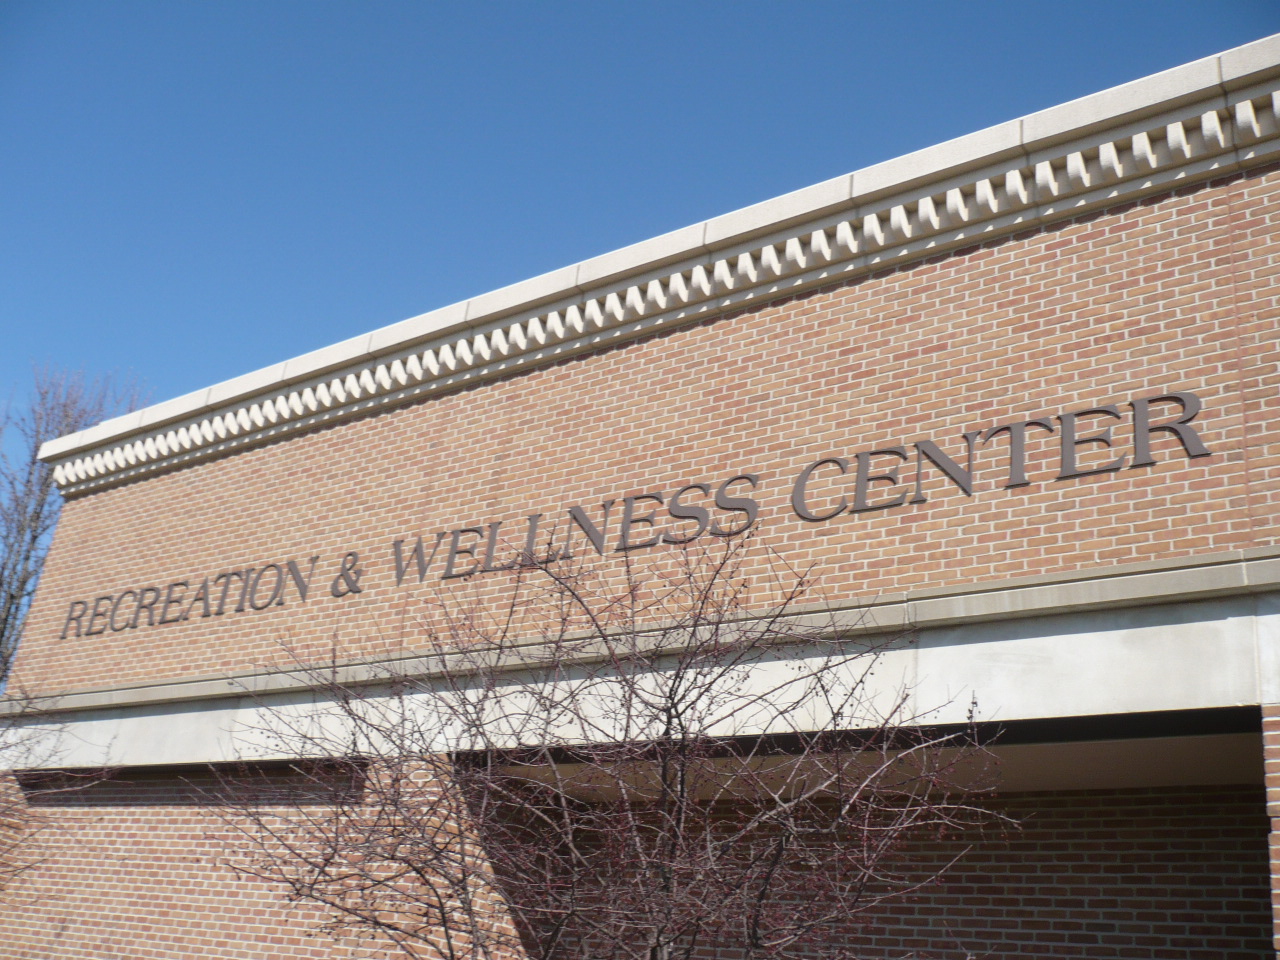 Recreation and Wellness Center